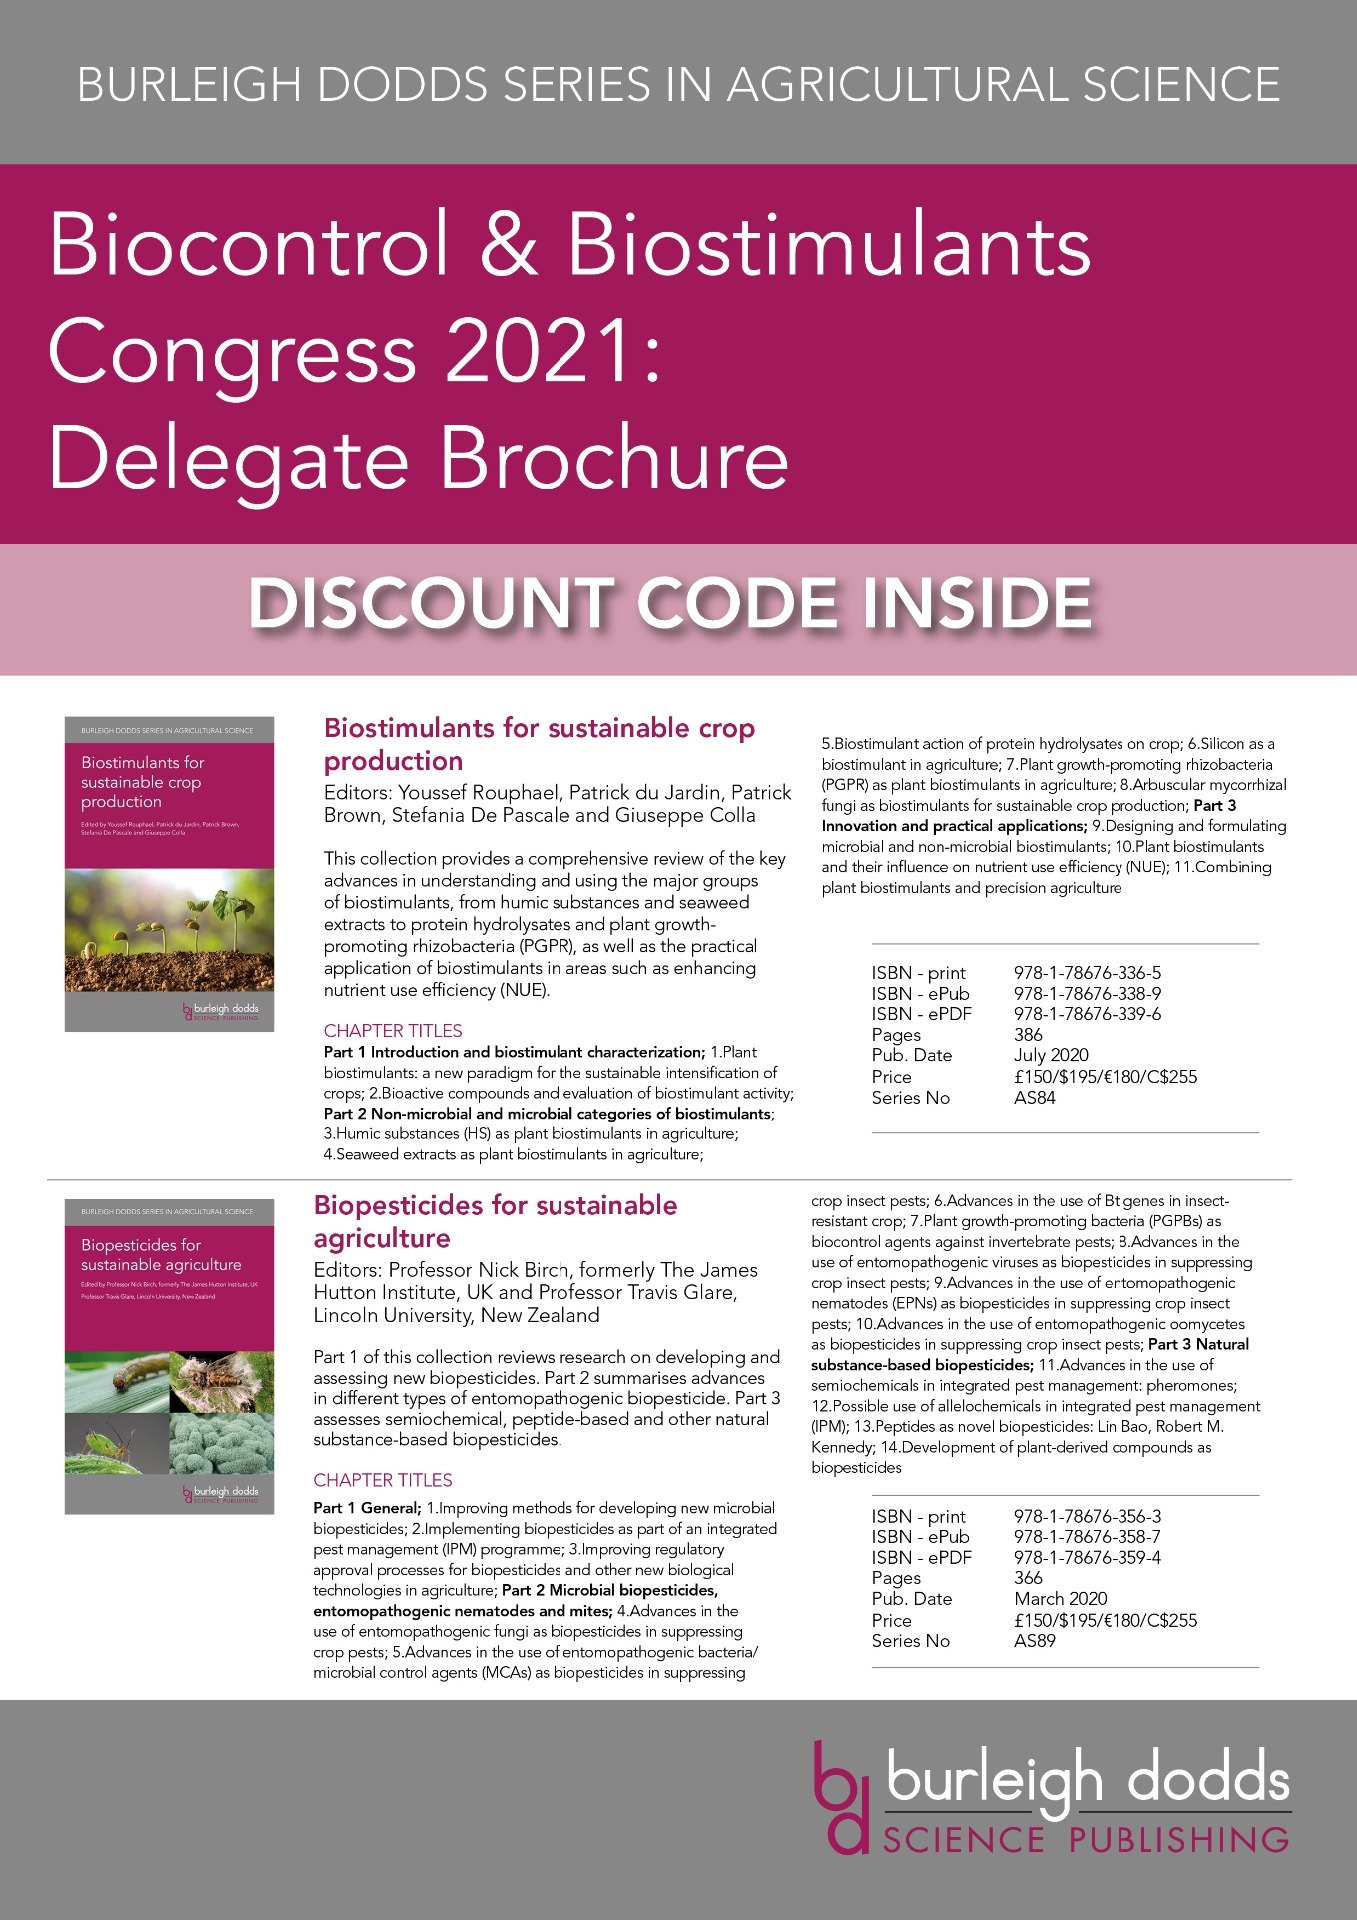 Biocontrol & Biostimulants Congress 2021 Delegate Brochure